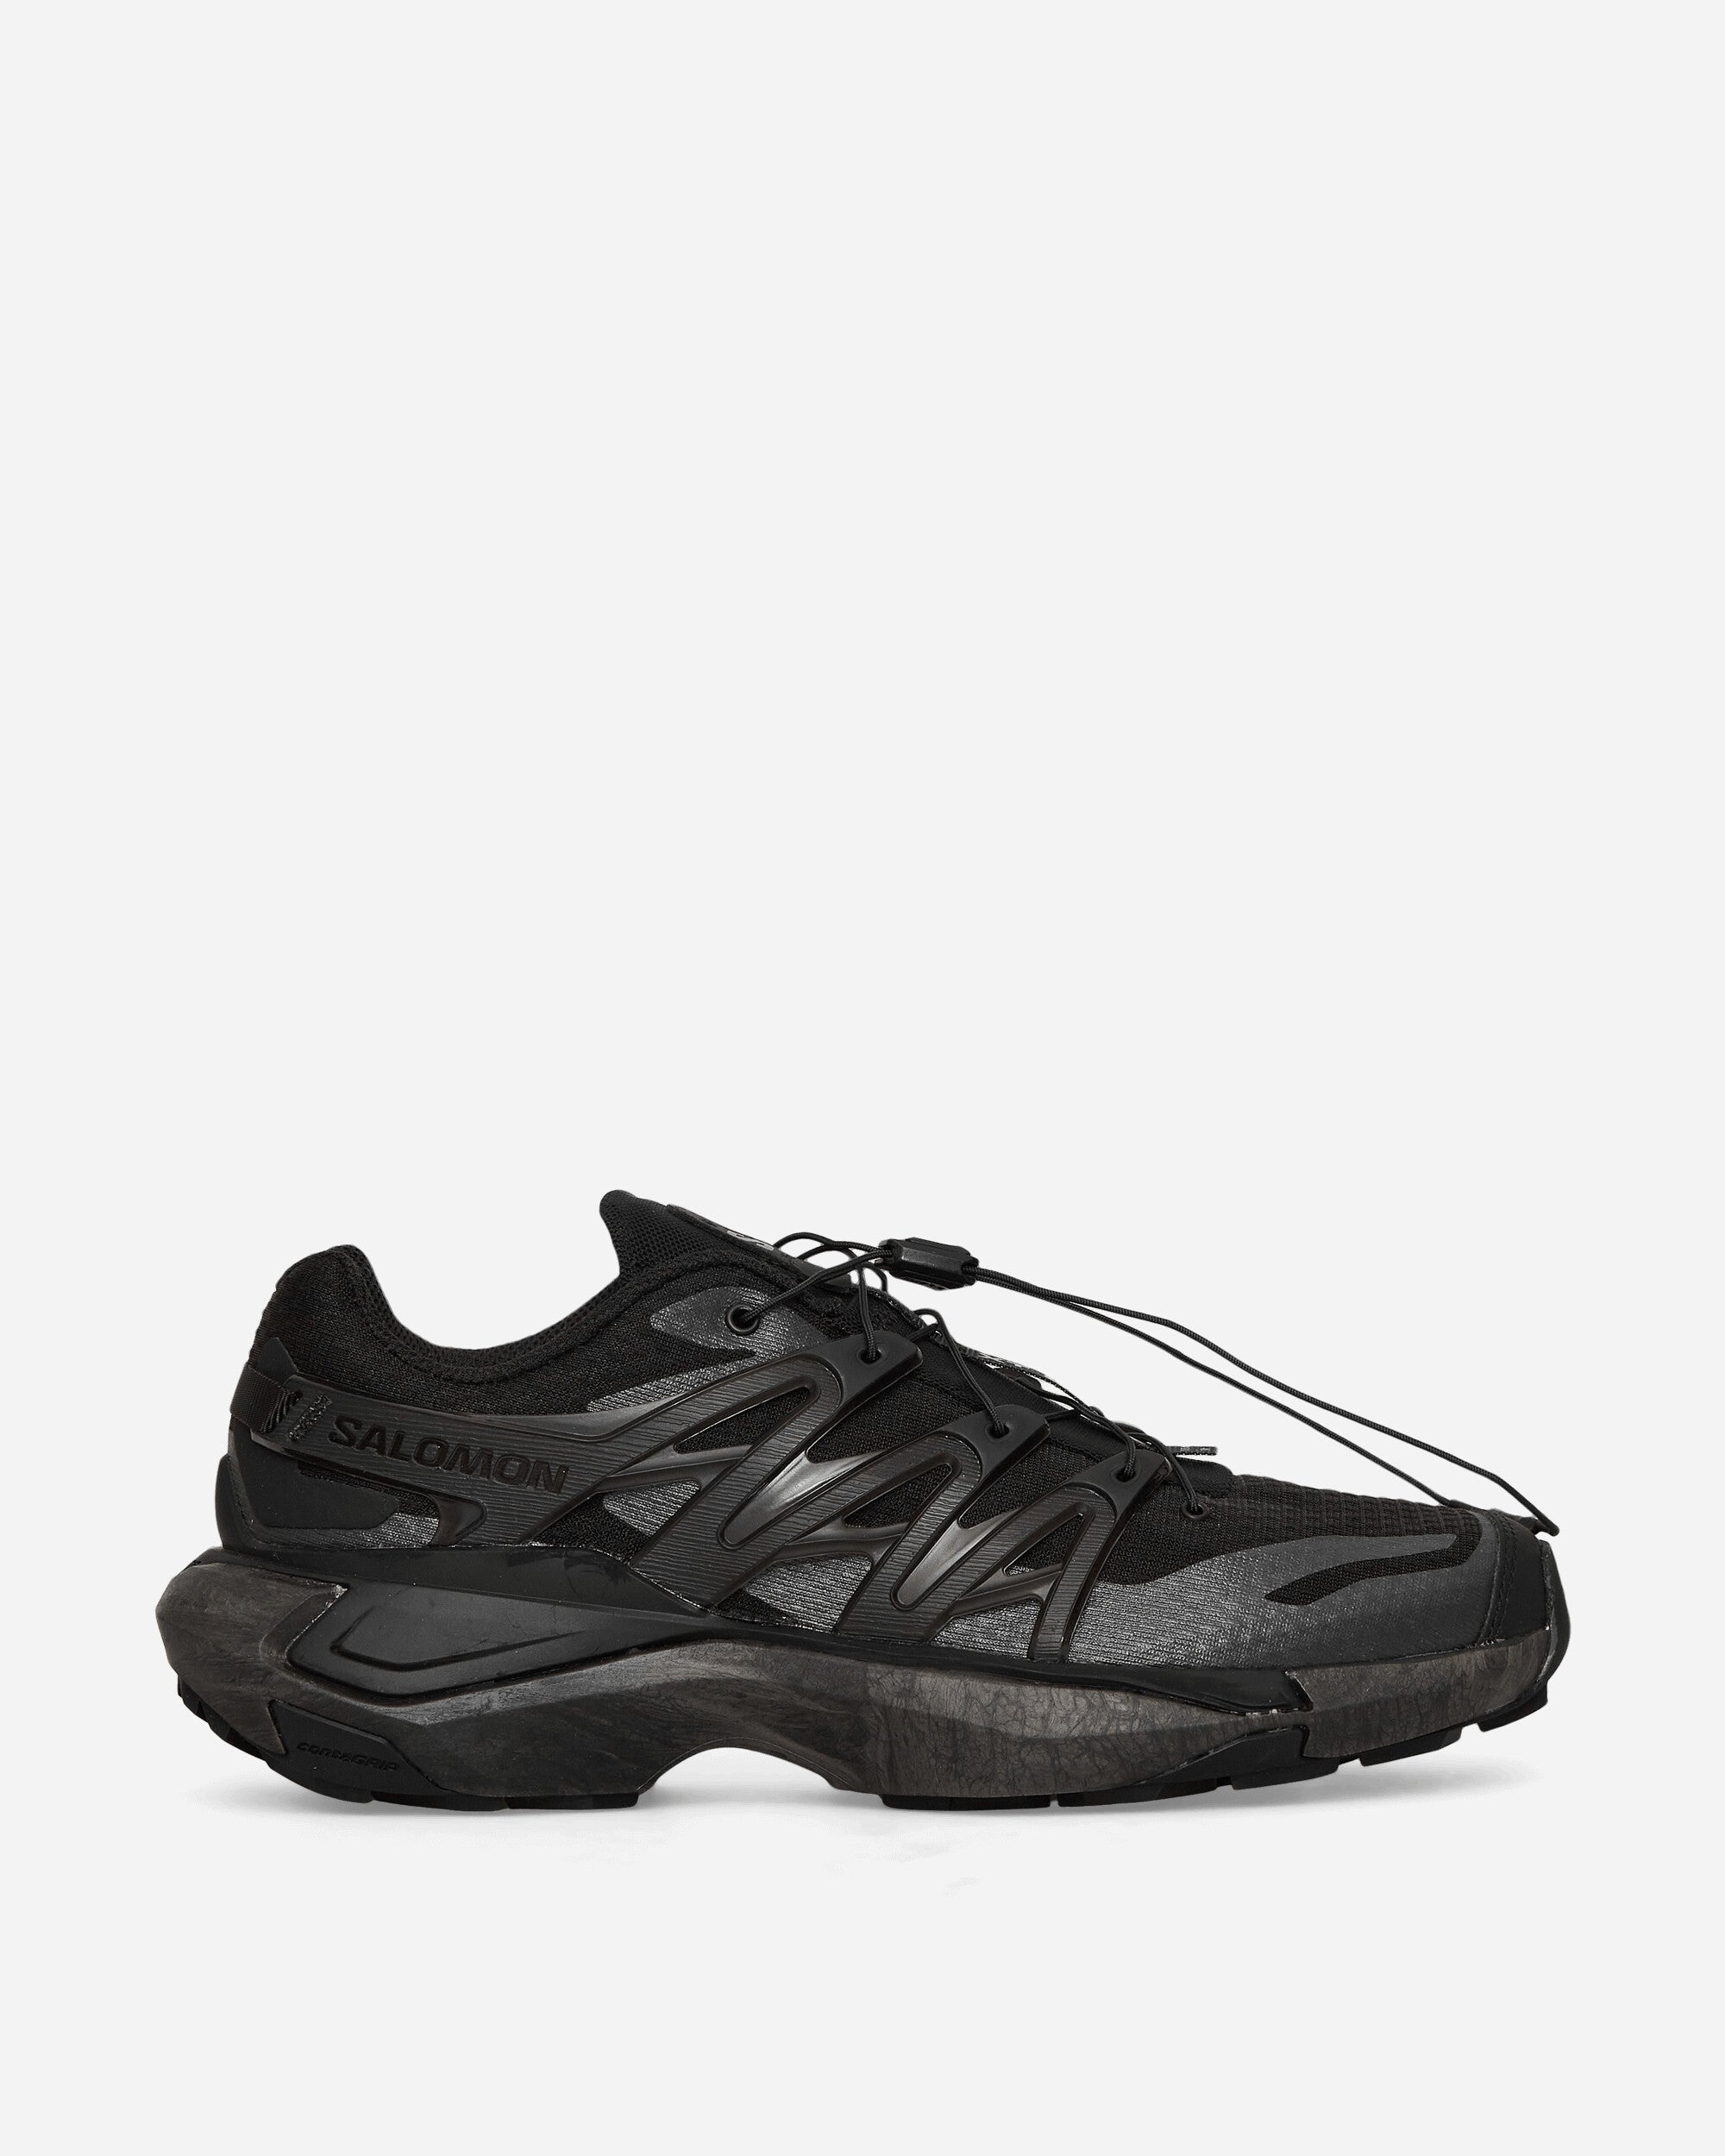 XT PU.RE Advanced Sneakers Black / Black / Phantom - 1